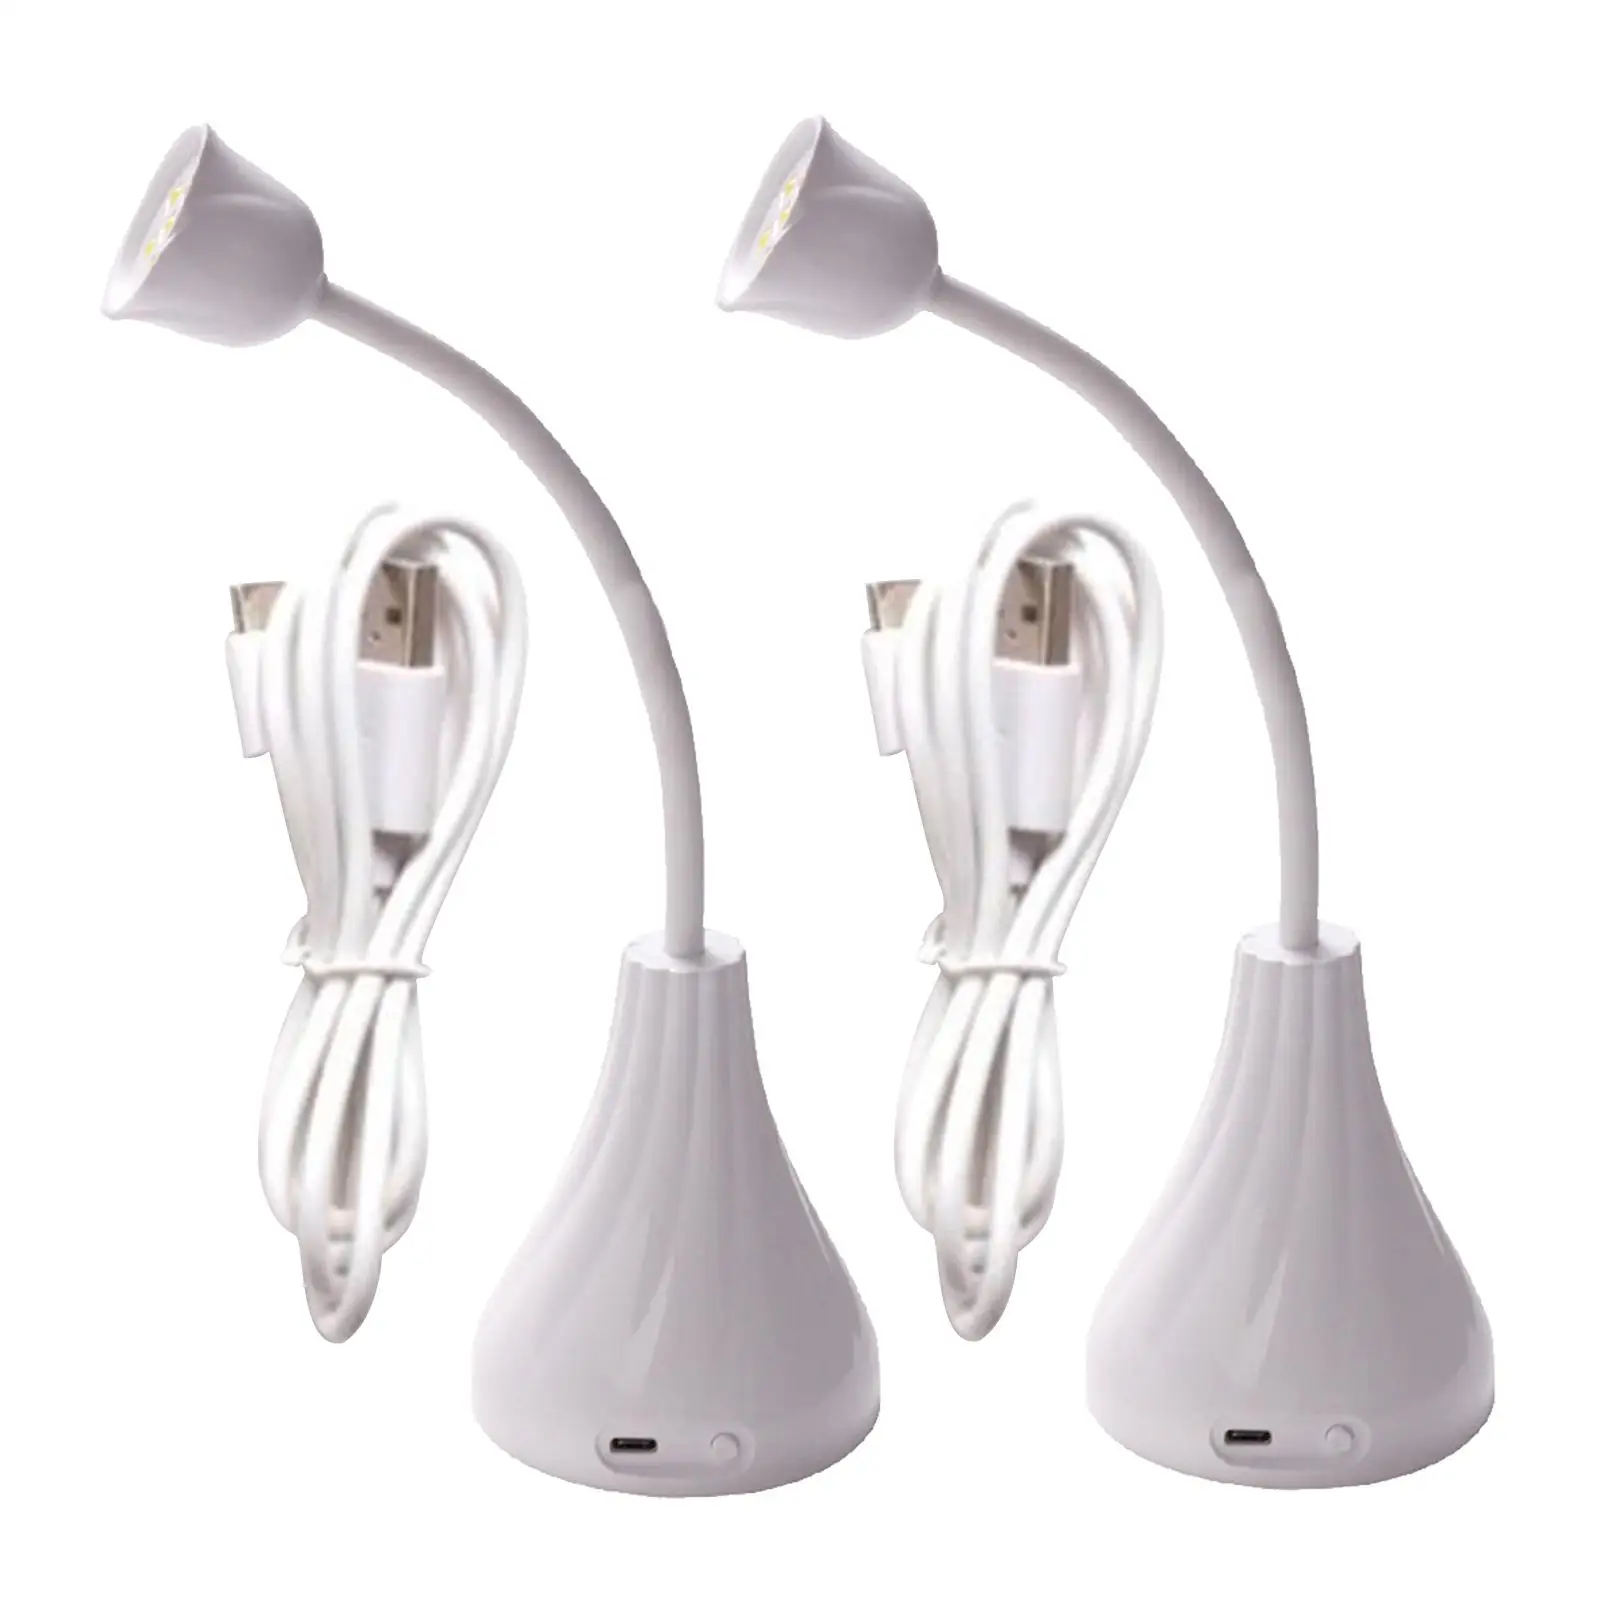 LED Nail Lamp, Professional Nail Dryer for  Fits Fingernail Toenail, Nail  Lamp for Home and Salon Use